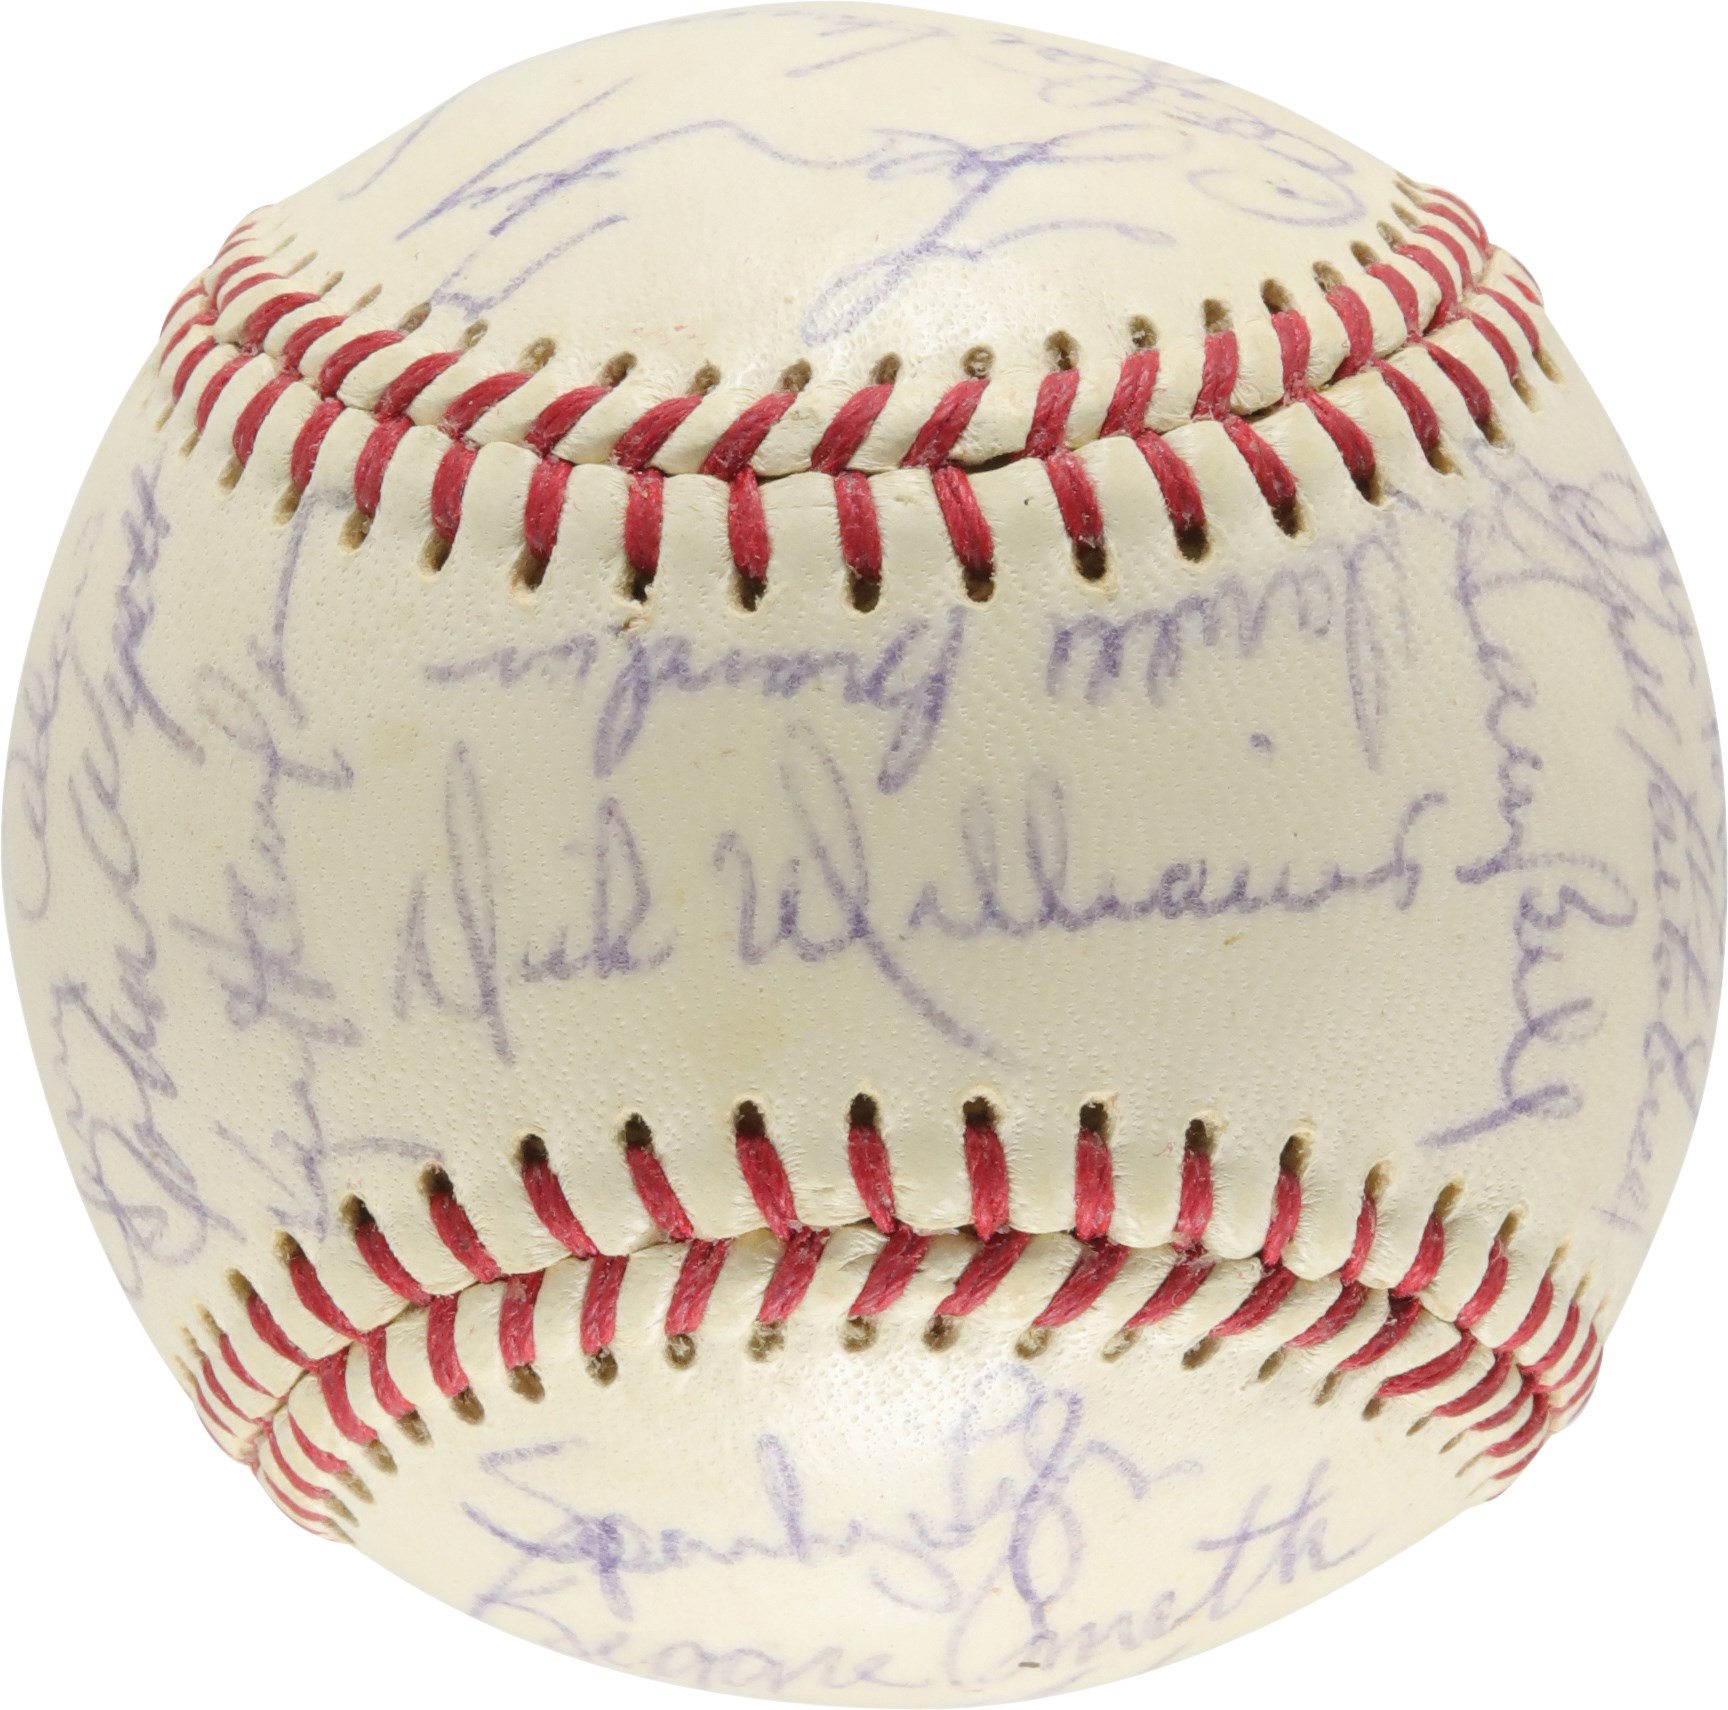 - 1967 American League Champion Boston Red Sox Team-Signed Baseball